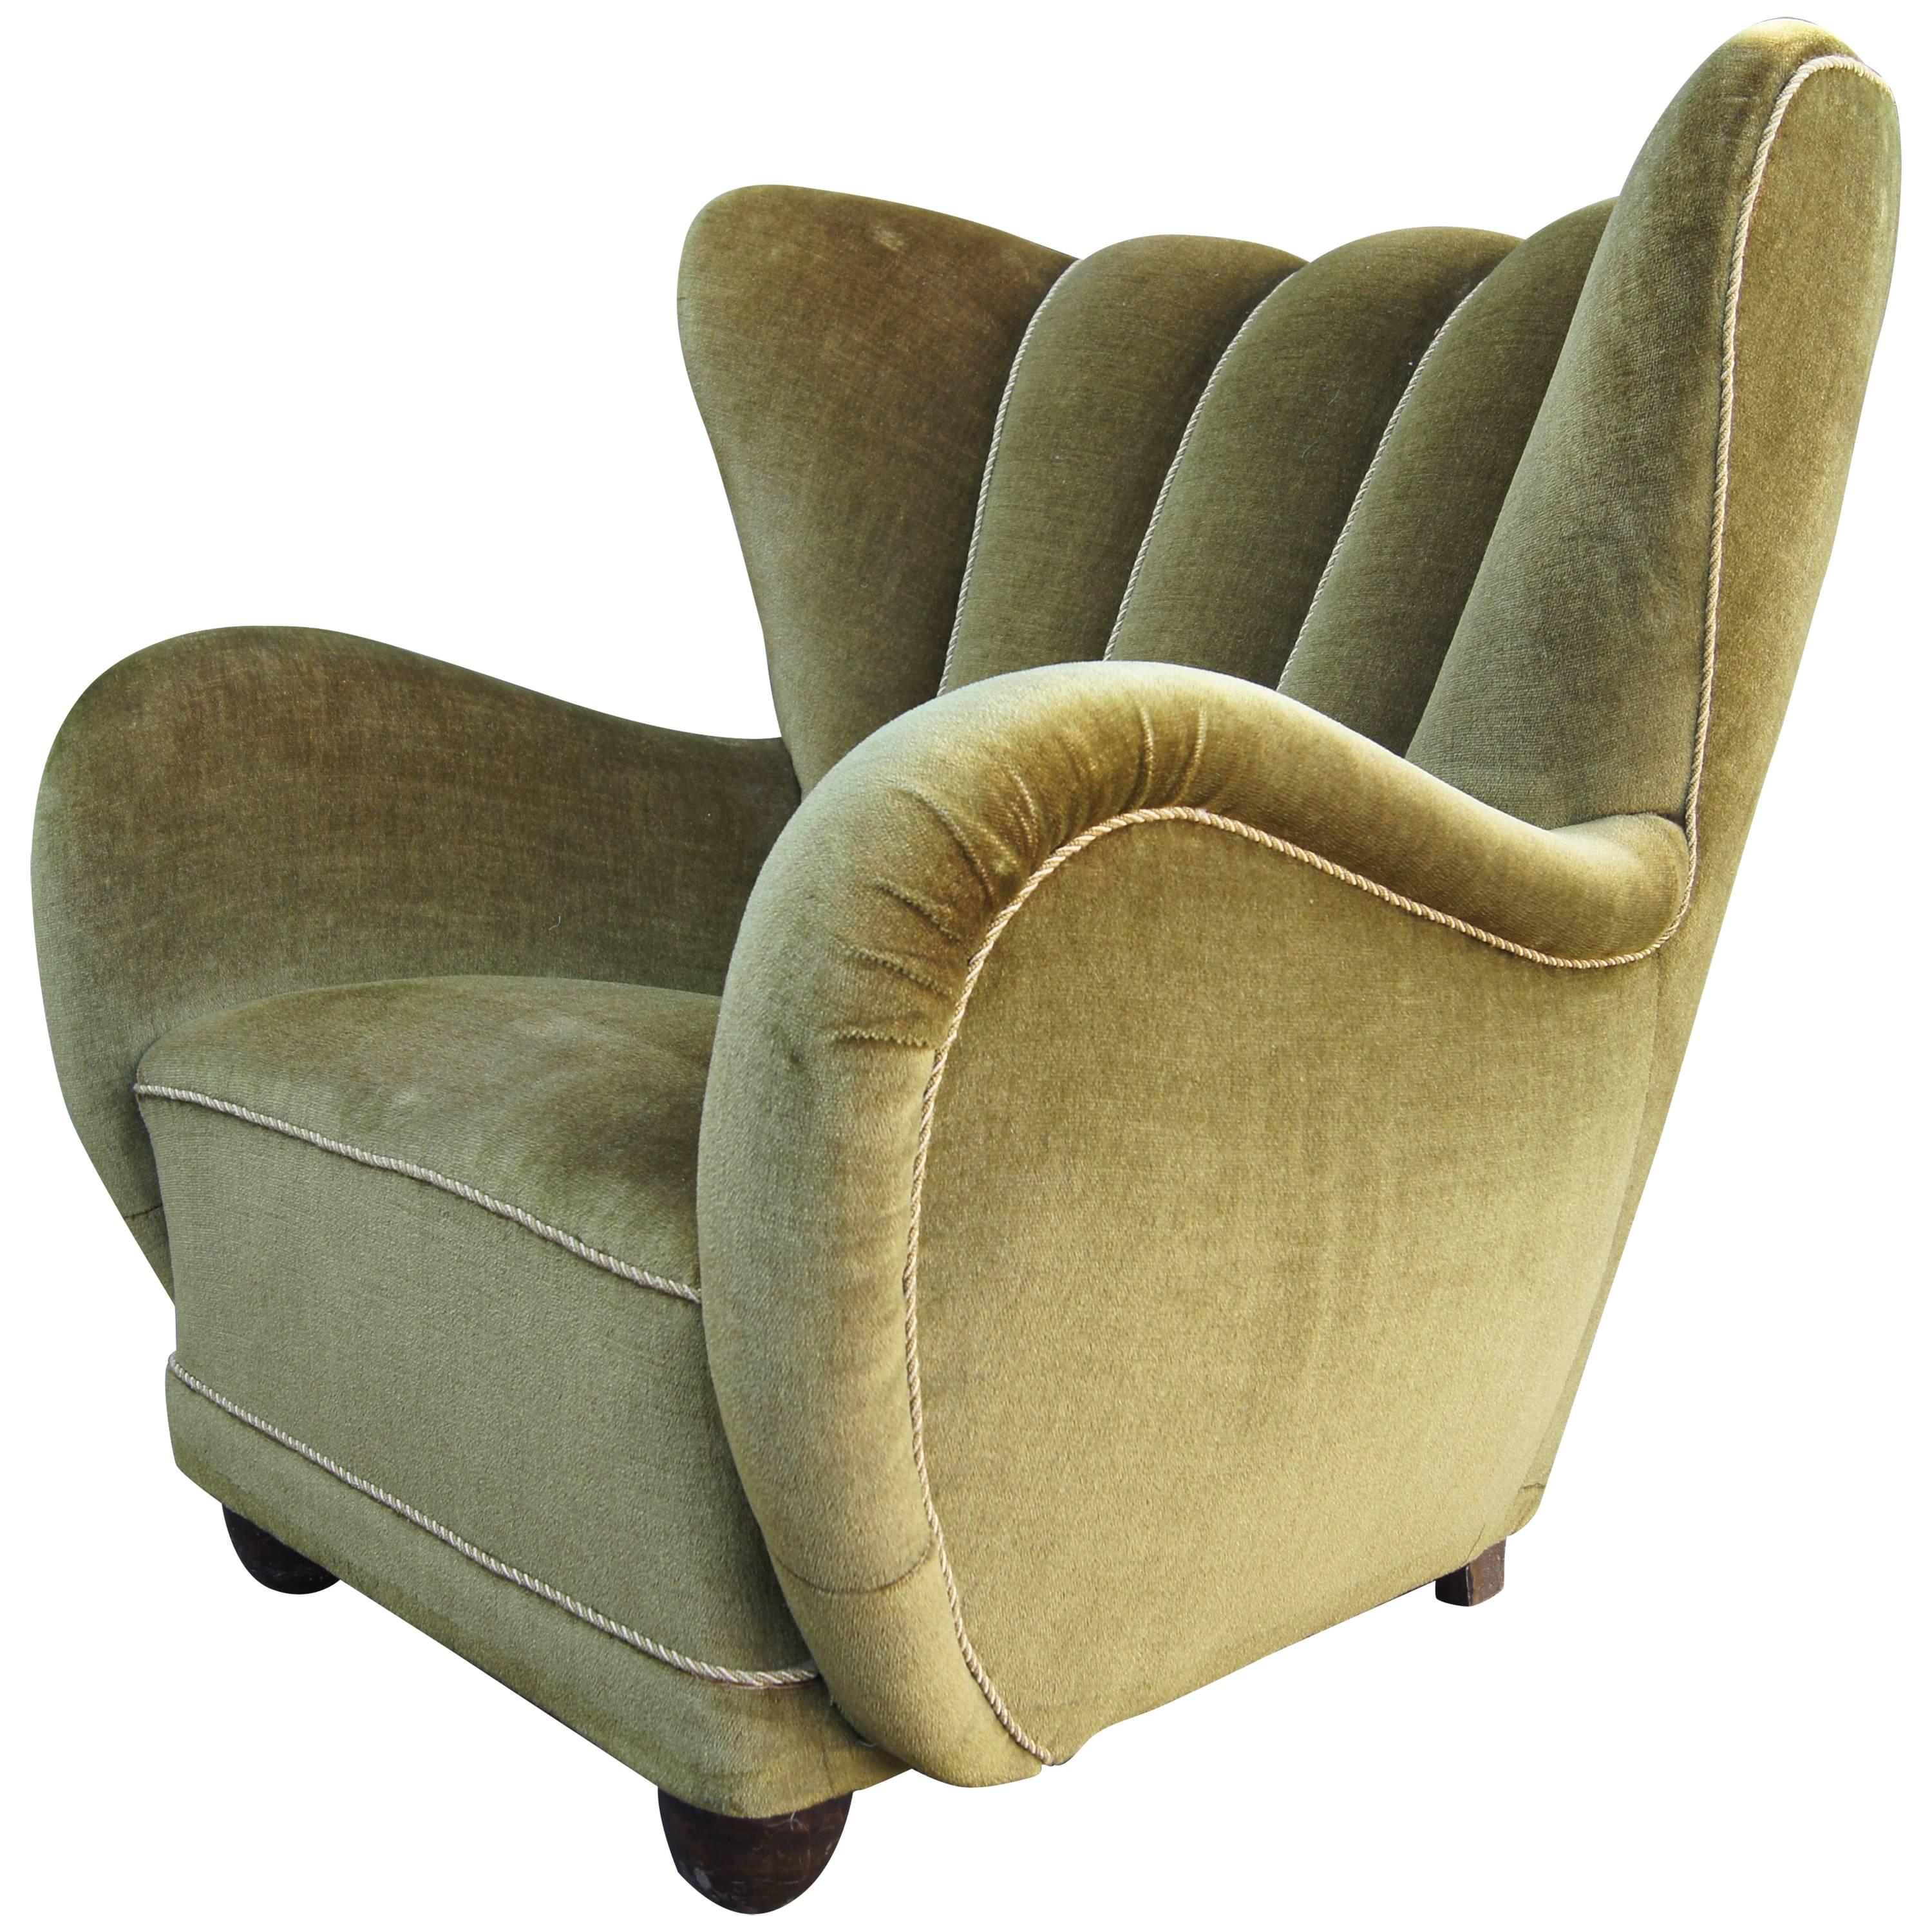 Danish Art Deco Club Chair in Moss Green Mohair